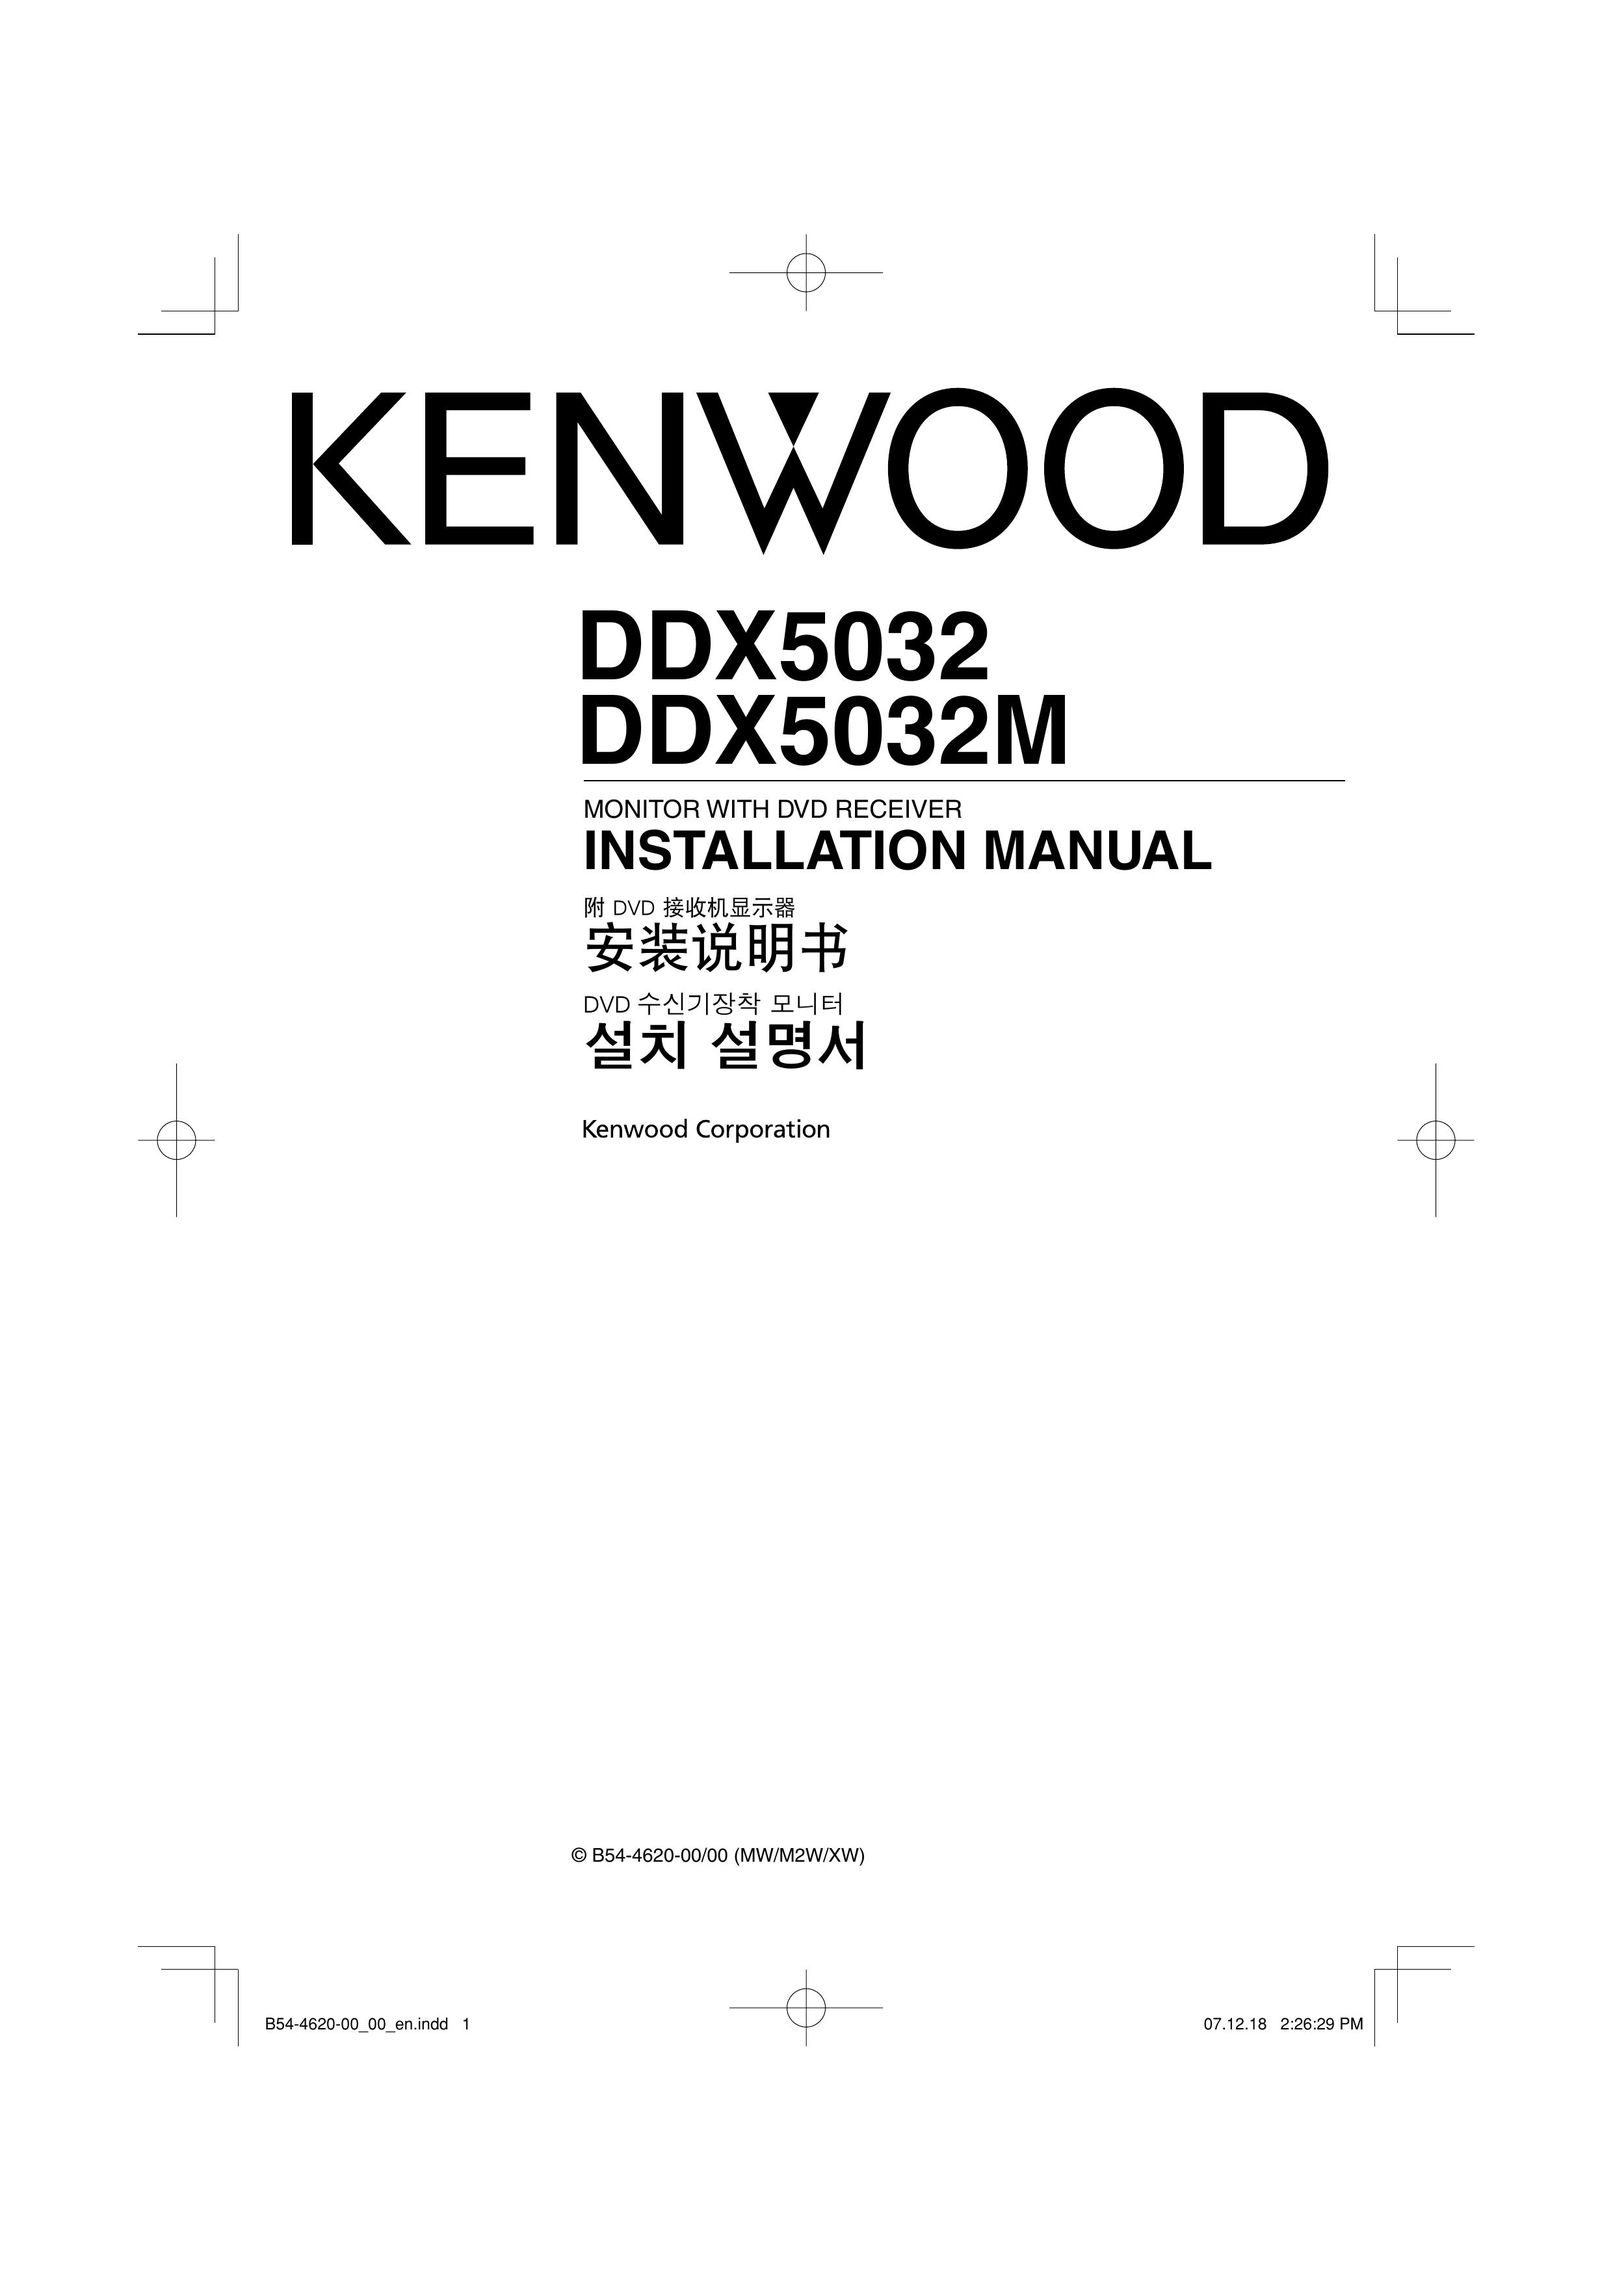 Kenwood DDX5032 Car Video System User Manual